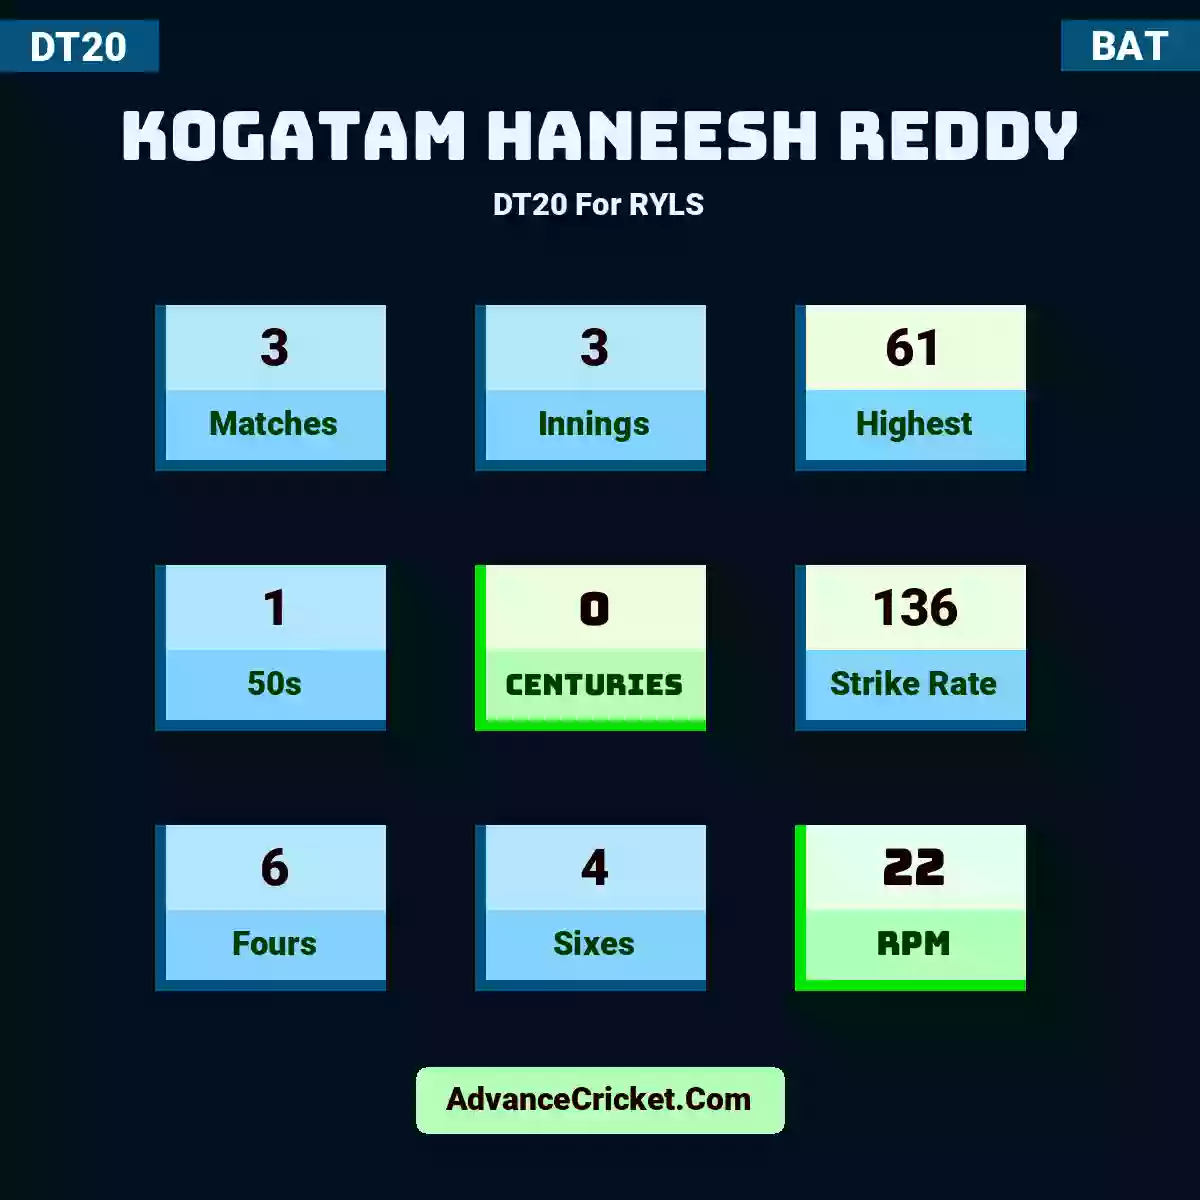 Kogatam Haneesh Reddy DT20  For RYLS, Kogatam Haneesh Reddy played 3 matches, scored 61 runs as highest, 1 half-centuries, and 0 centuries, with a strike rate of 136. K.Haneesh.Reddy hit 6 fours and 4 sixes, with an RPM of 22.